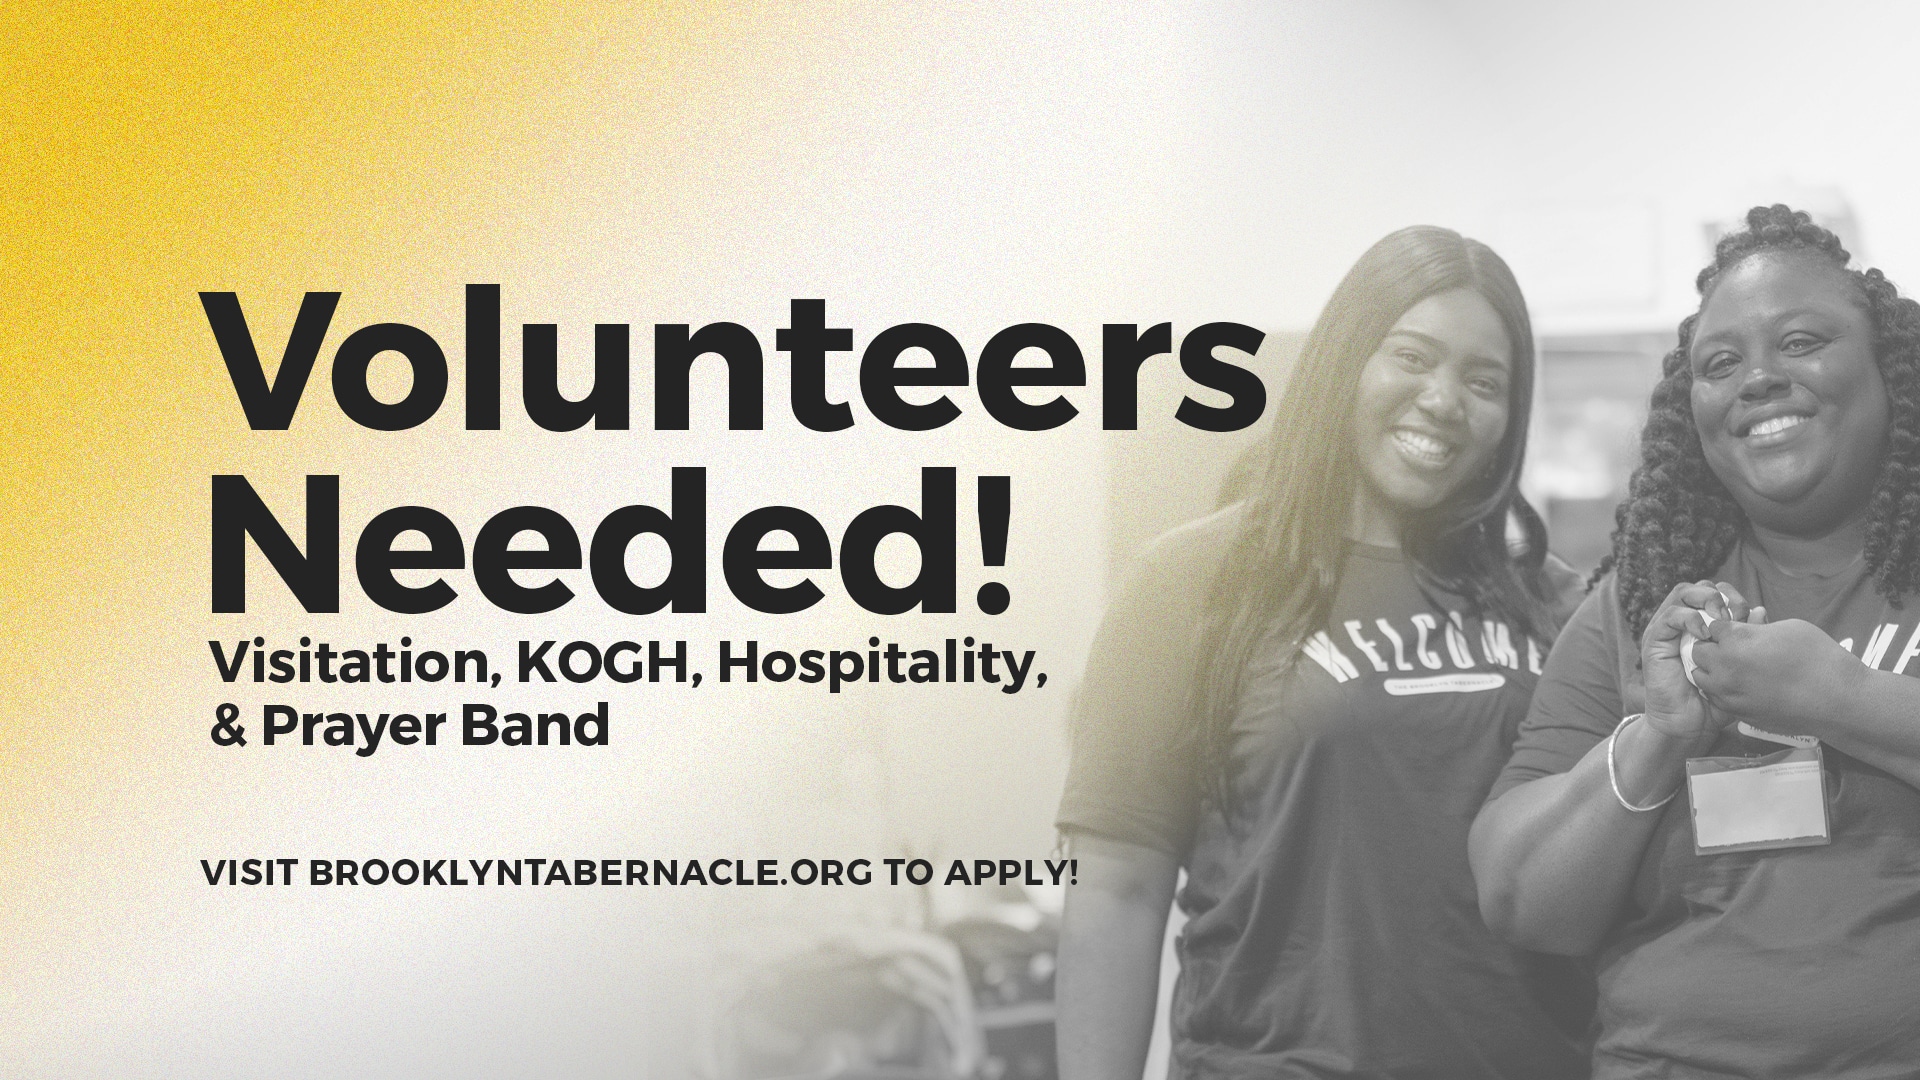 The Brooklyn Tabernacle Needed You! - Volunteers Needed header - two beautiful women smiling